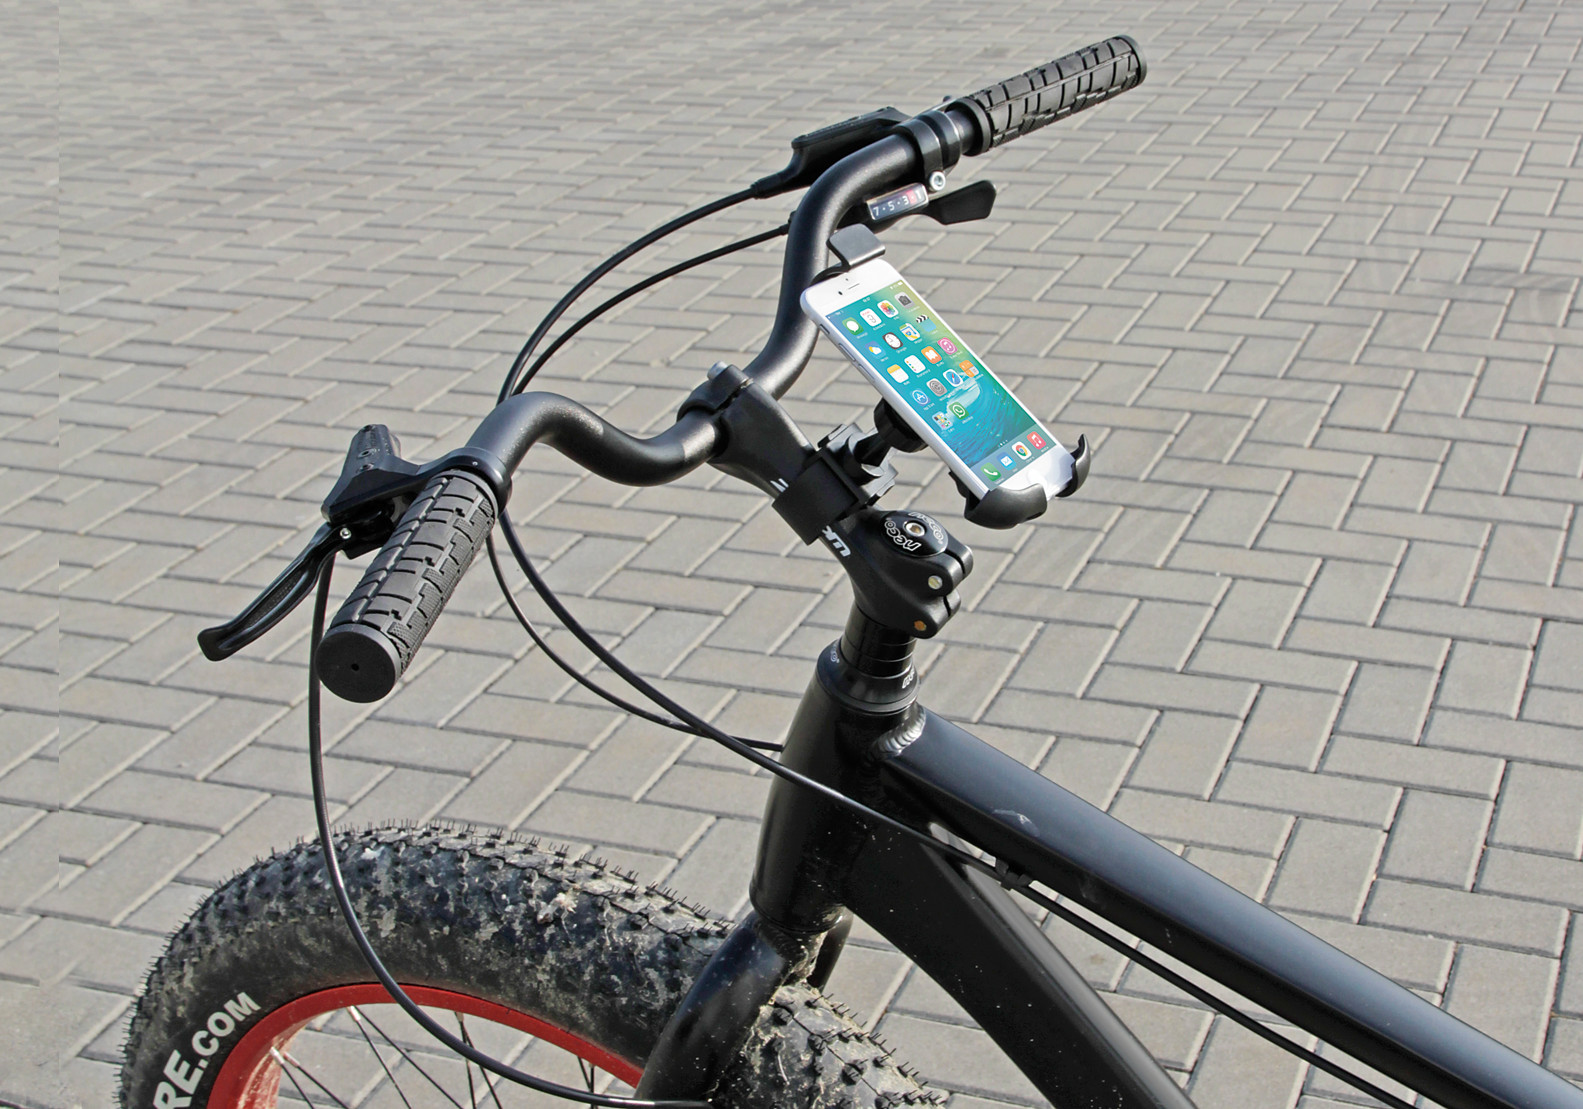 Suport telefon mobil Ridex Mecha pentru bicicleta Garage AutoRide